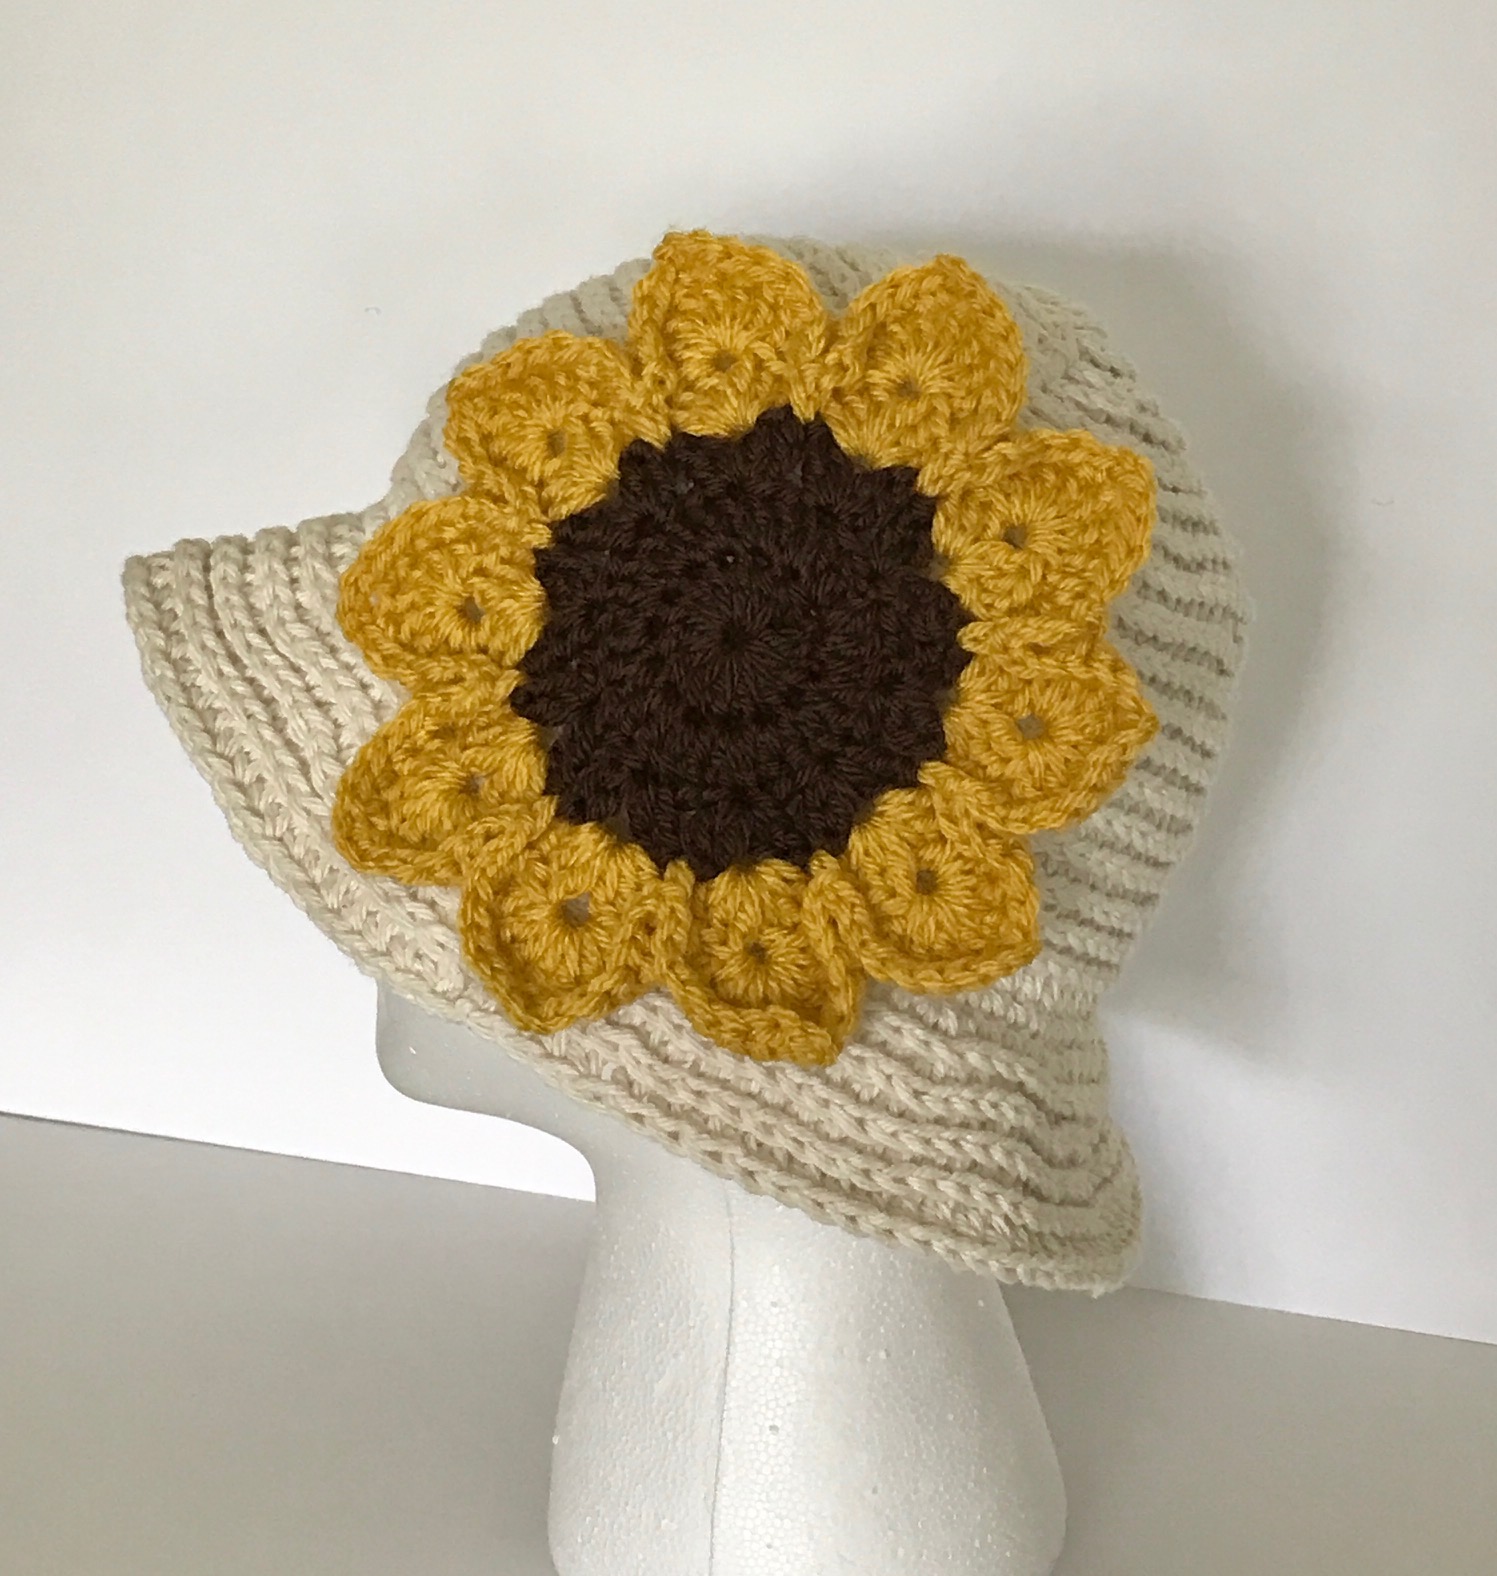 Crochet Summer Hat with Sunflower, Free Crochet Pattern